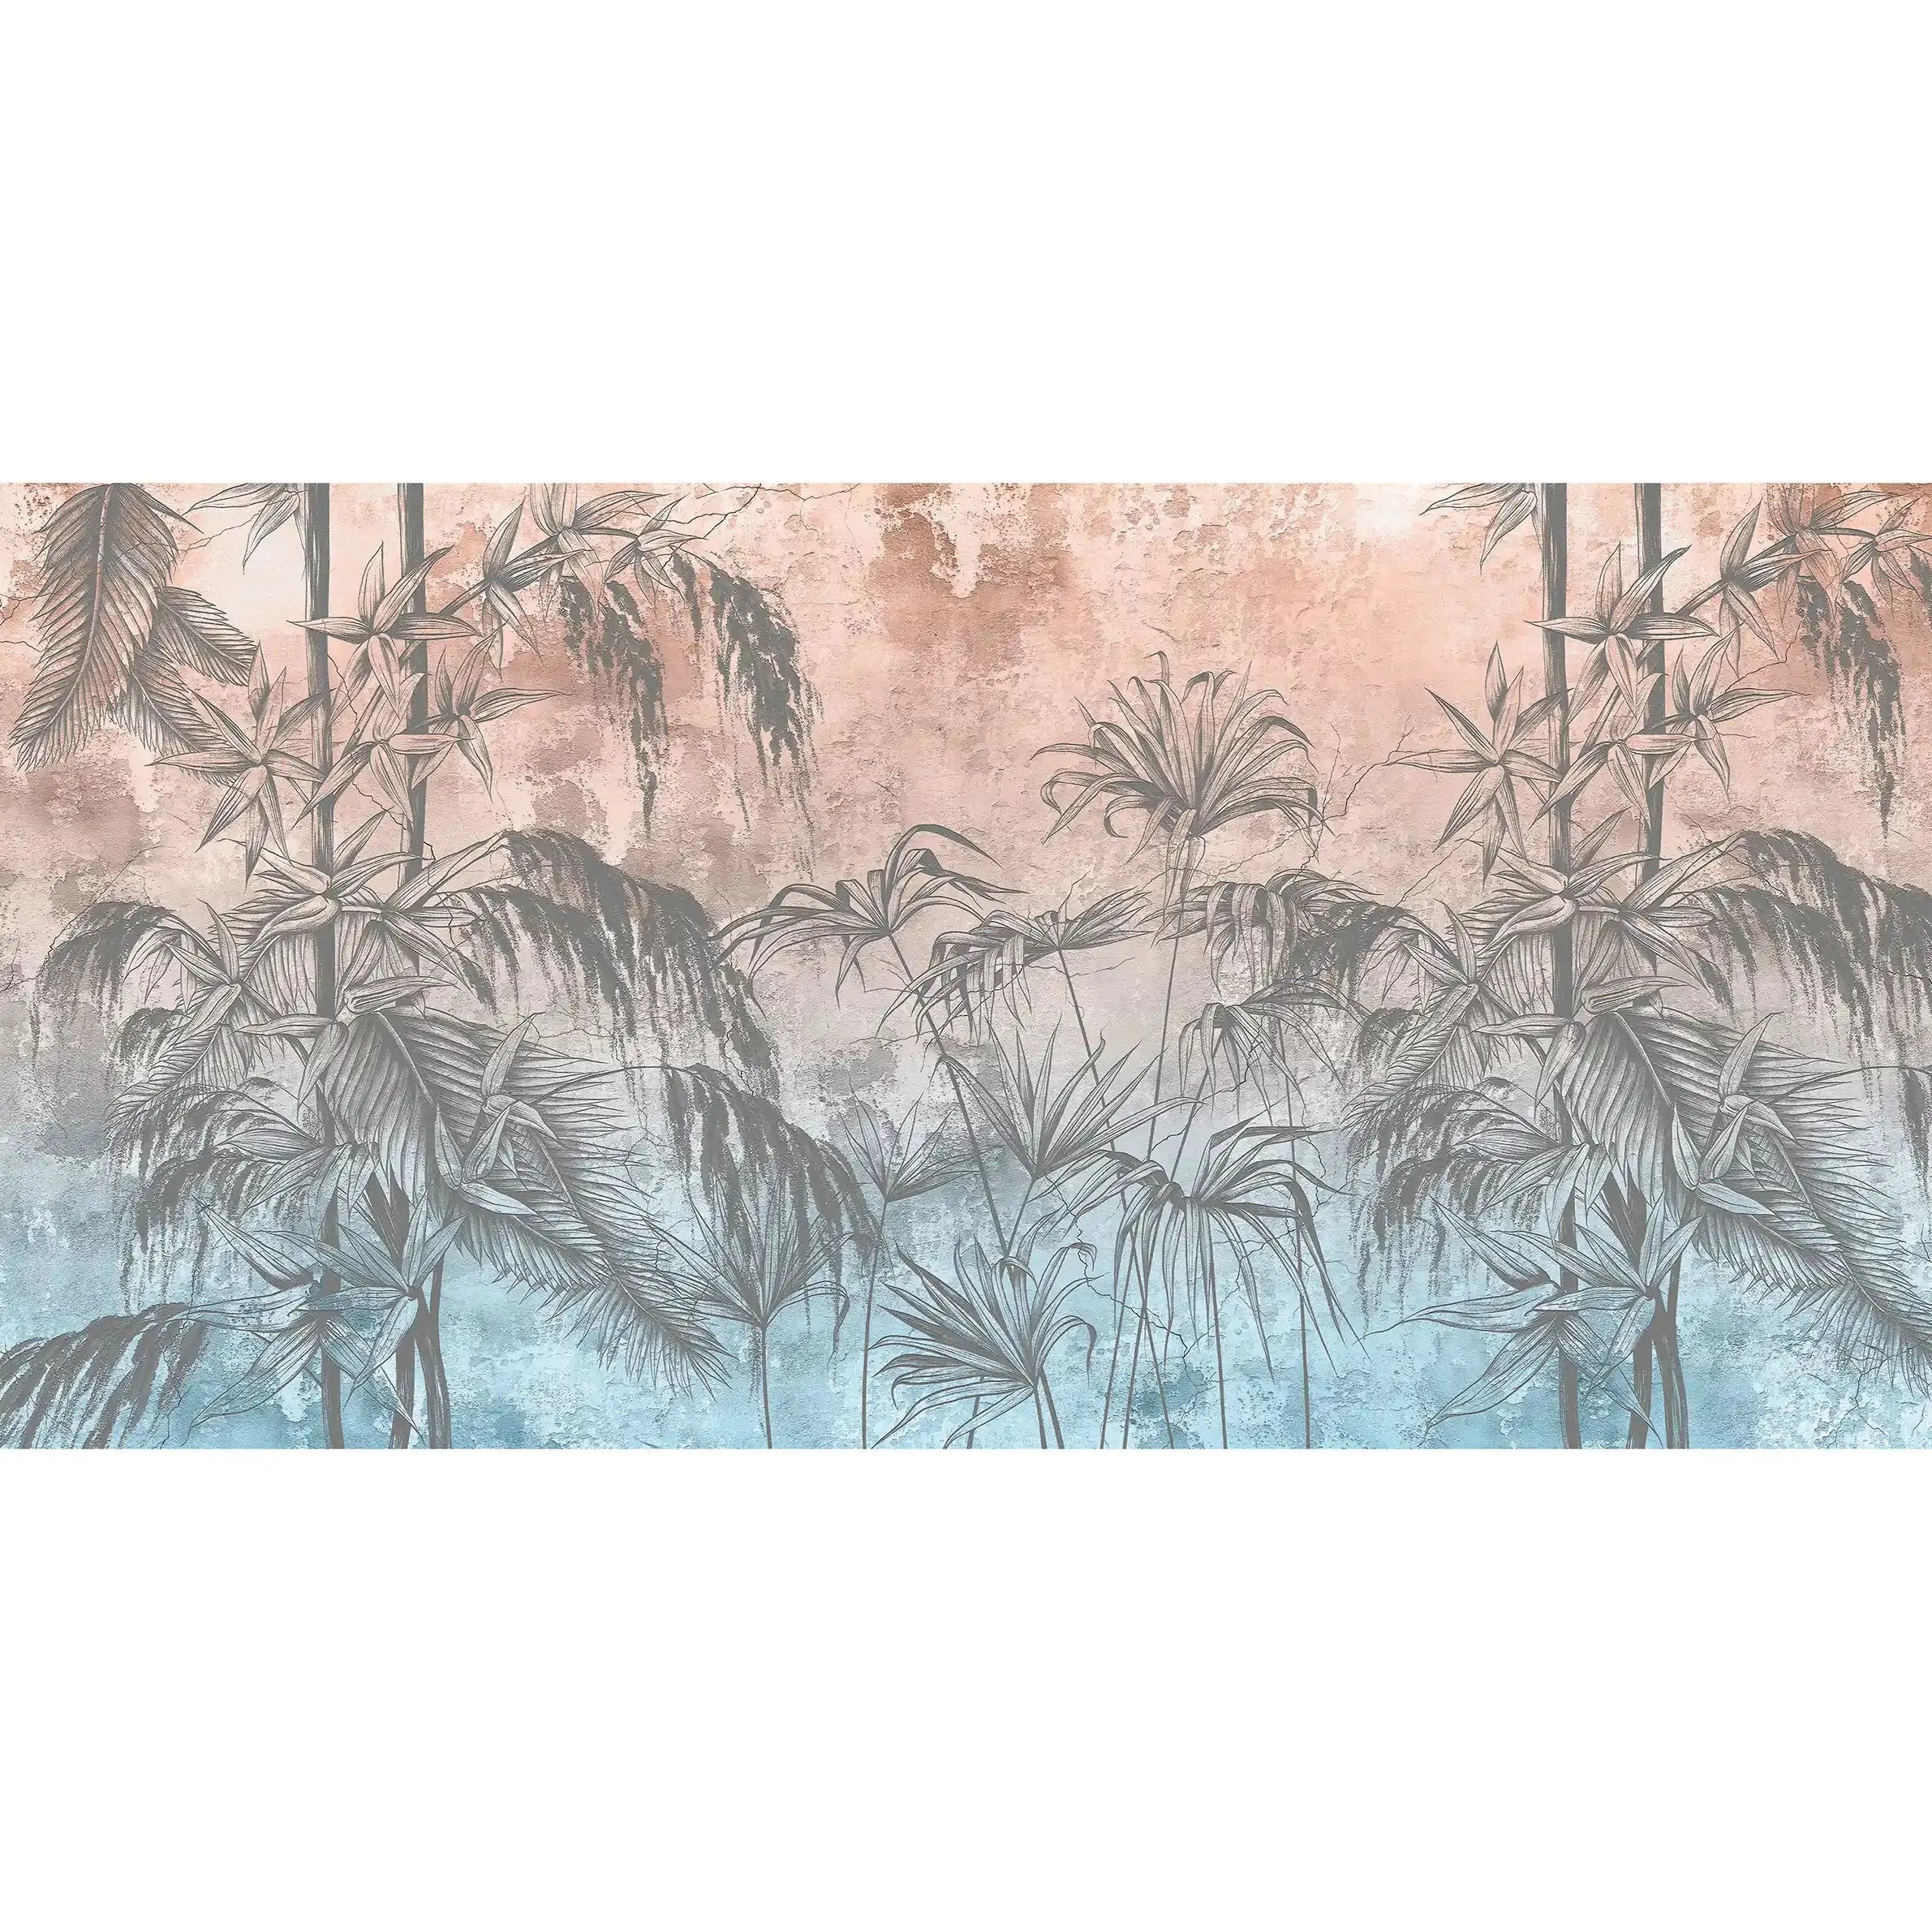 3001-D / Botanical Peel and Stick Wallpaper - Wild Floral, Tropical Leaf Wall Mural, Self Adhesive & Removable Design for Room, Shelf, Drawer Liner - Artevella